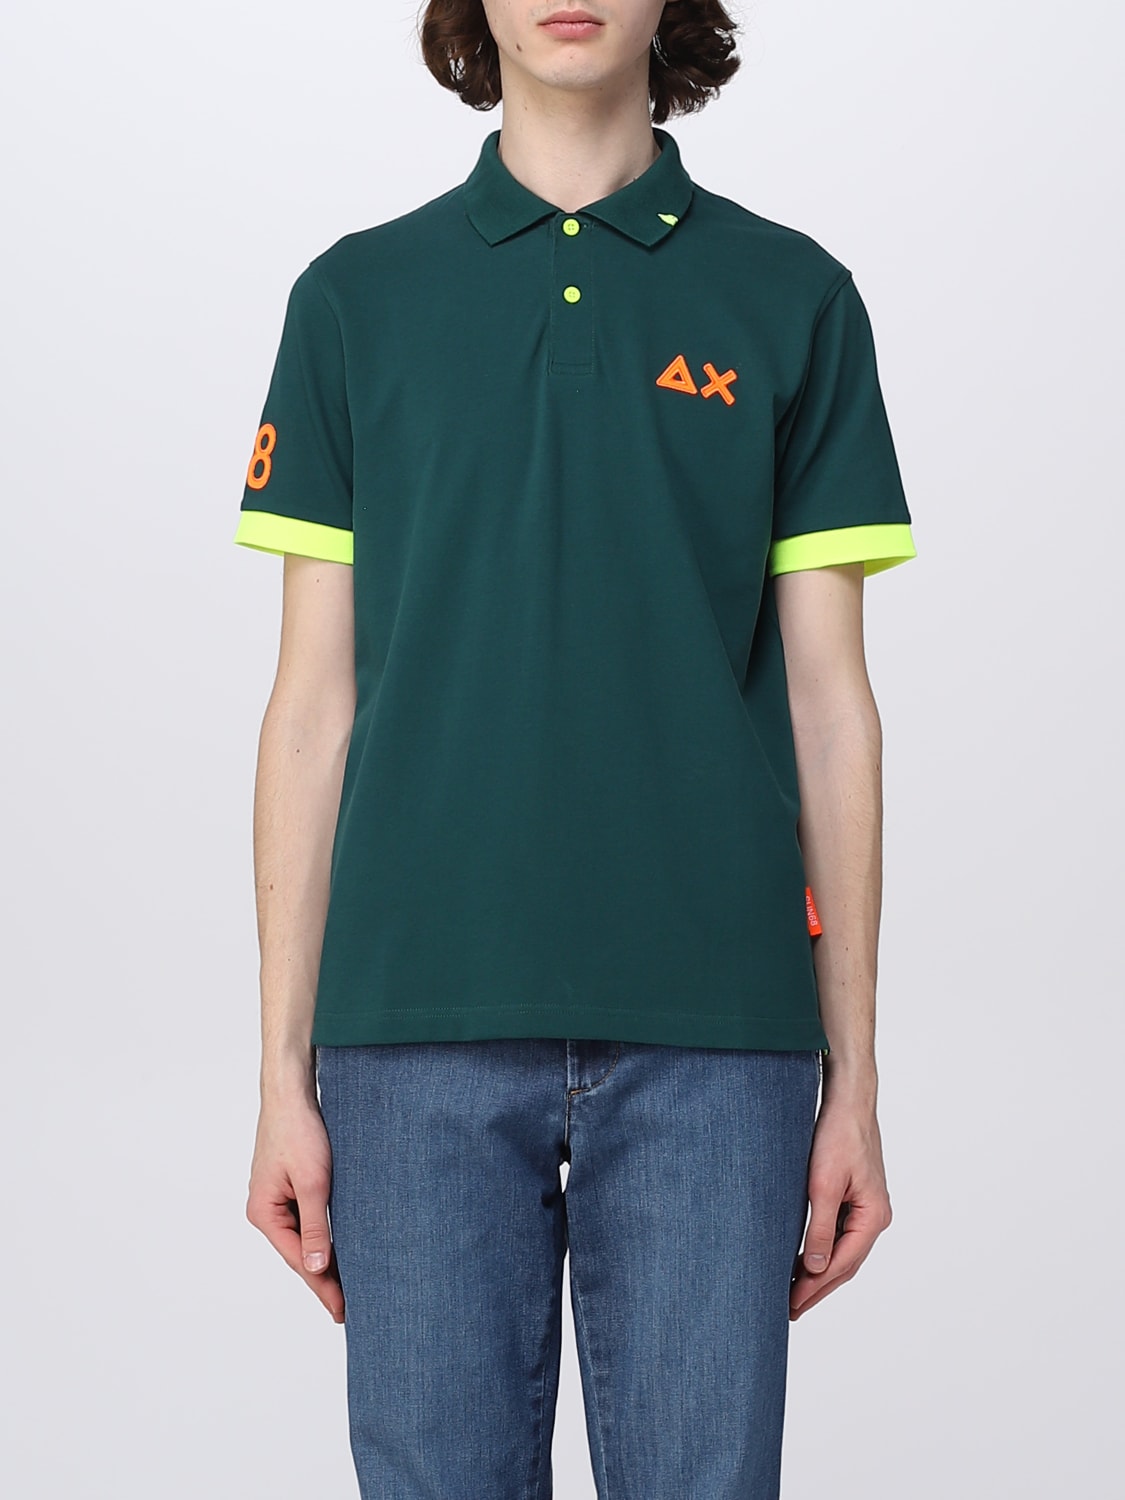 SUN 68: polo shirt for man - Green | Sun 68 polo shirt A33122 online on ...